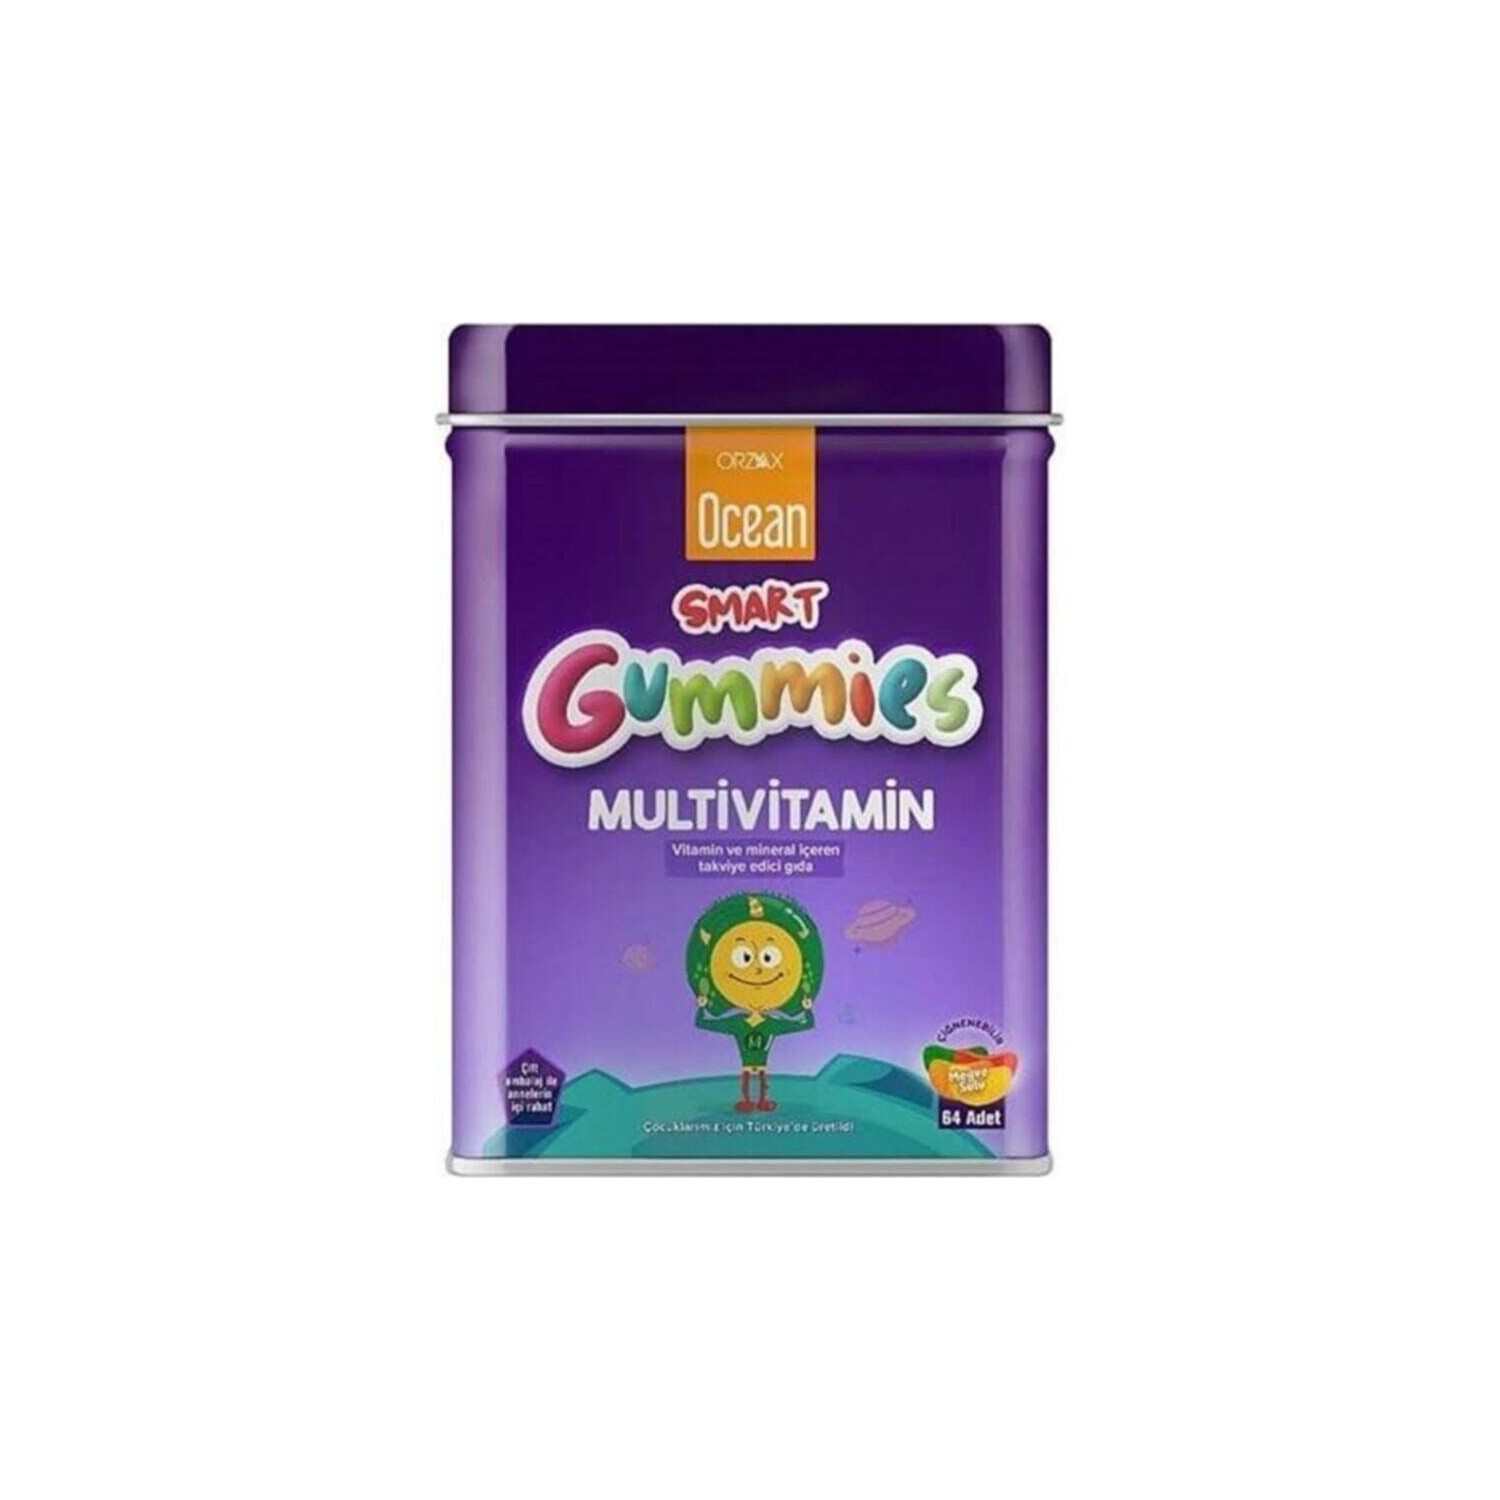 livs gummies men’s multivitamin Поливитамины Ocean Smart Gummies, 3 упаковки по 64 штуки